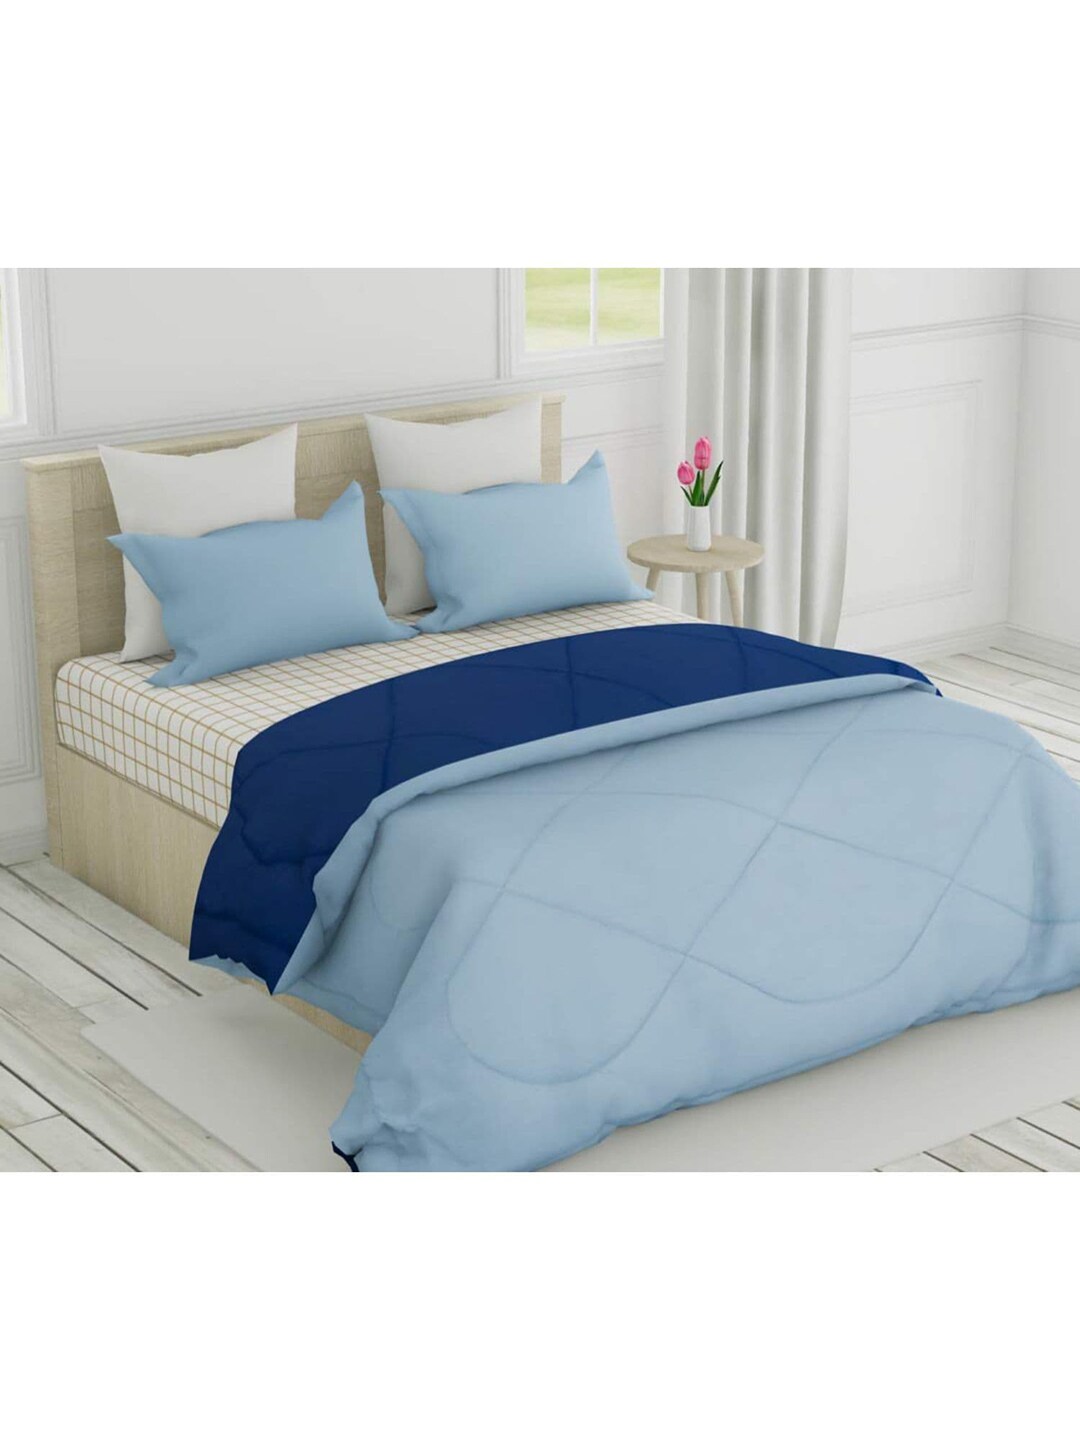 haus & kinder Navy Blue Microfiber AC Room 150 GSM Double Bed Reversible Comforter Price in India